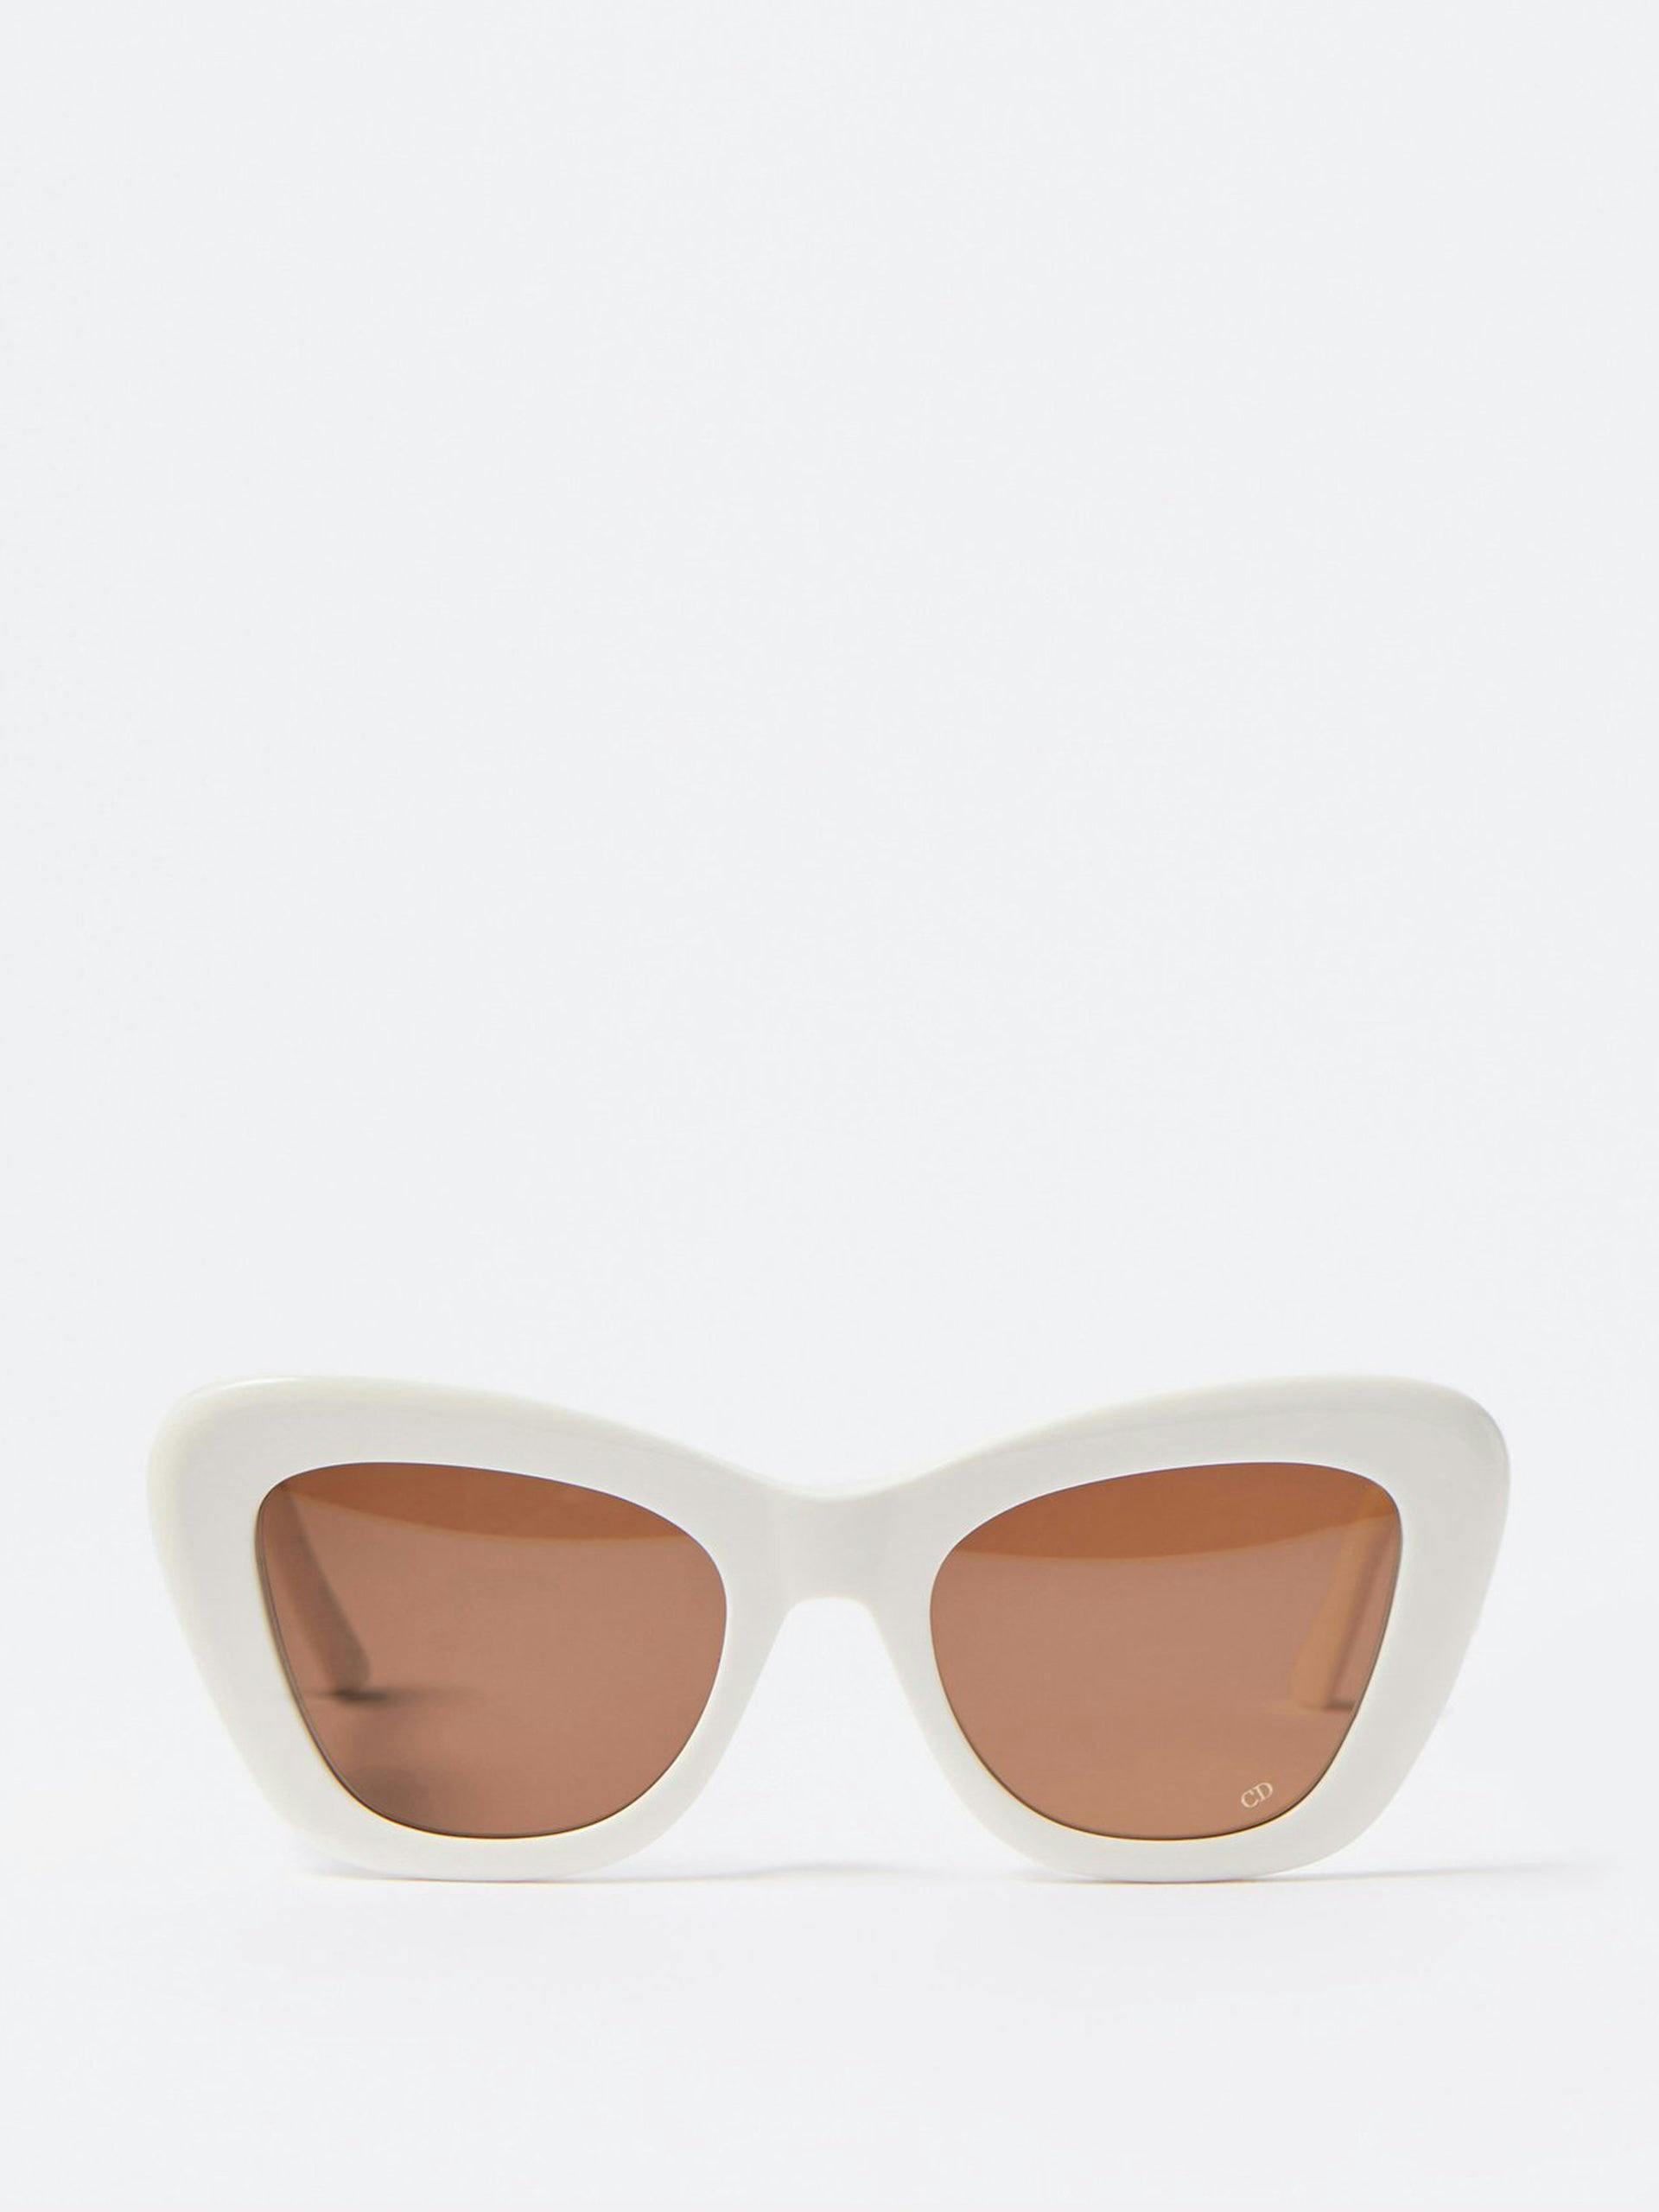 White cat eye sunglasses